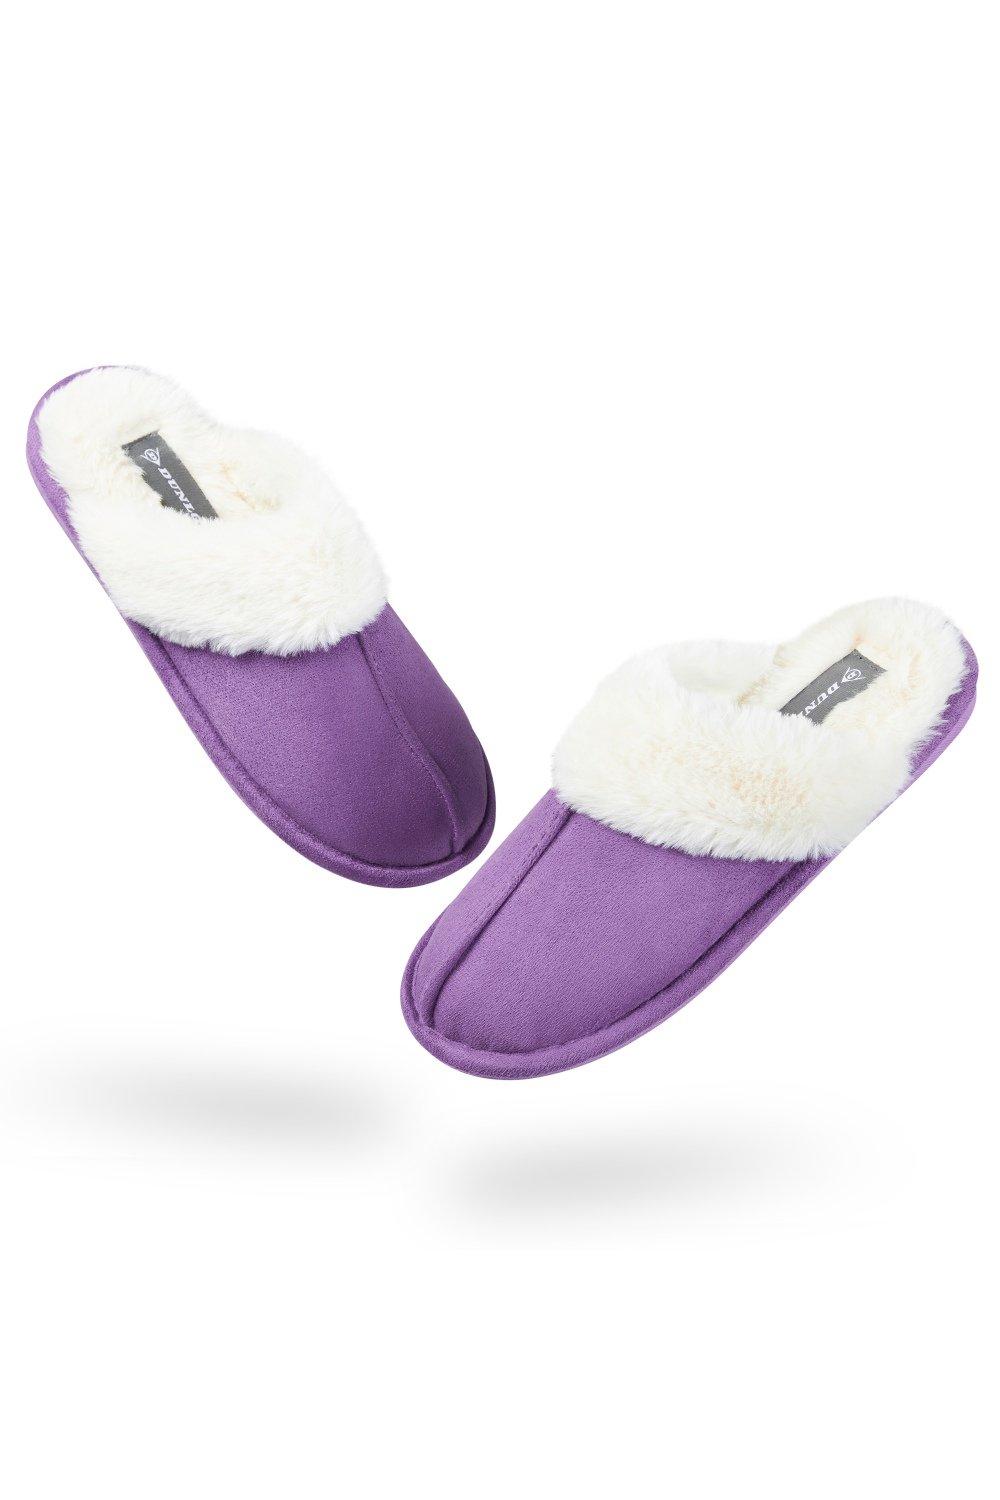 winter ladies cotton slippers simple color matching comfortable cotton slippers women flat slippers women furry slippers women Домашние пушистые тапочки на толстой меховой подкладке Dunlop, фиолетовый